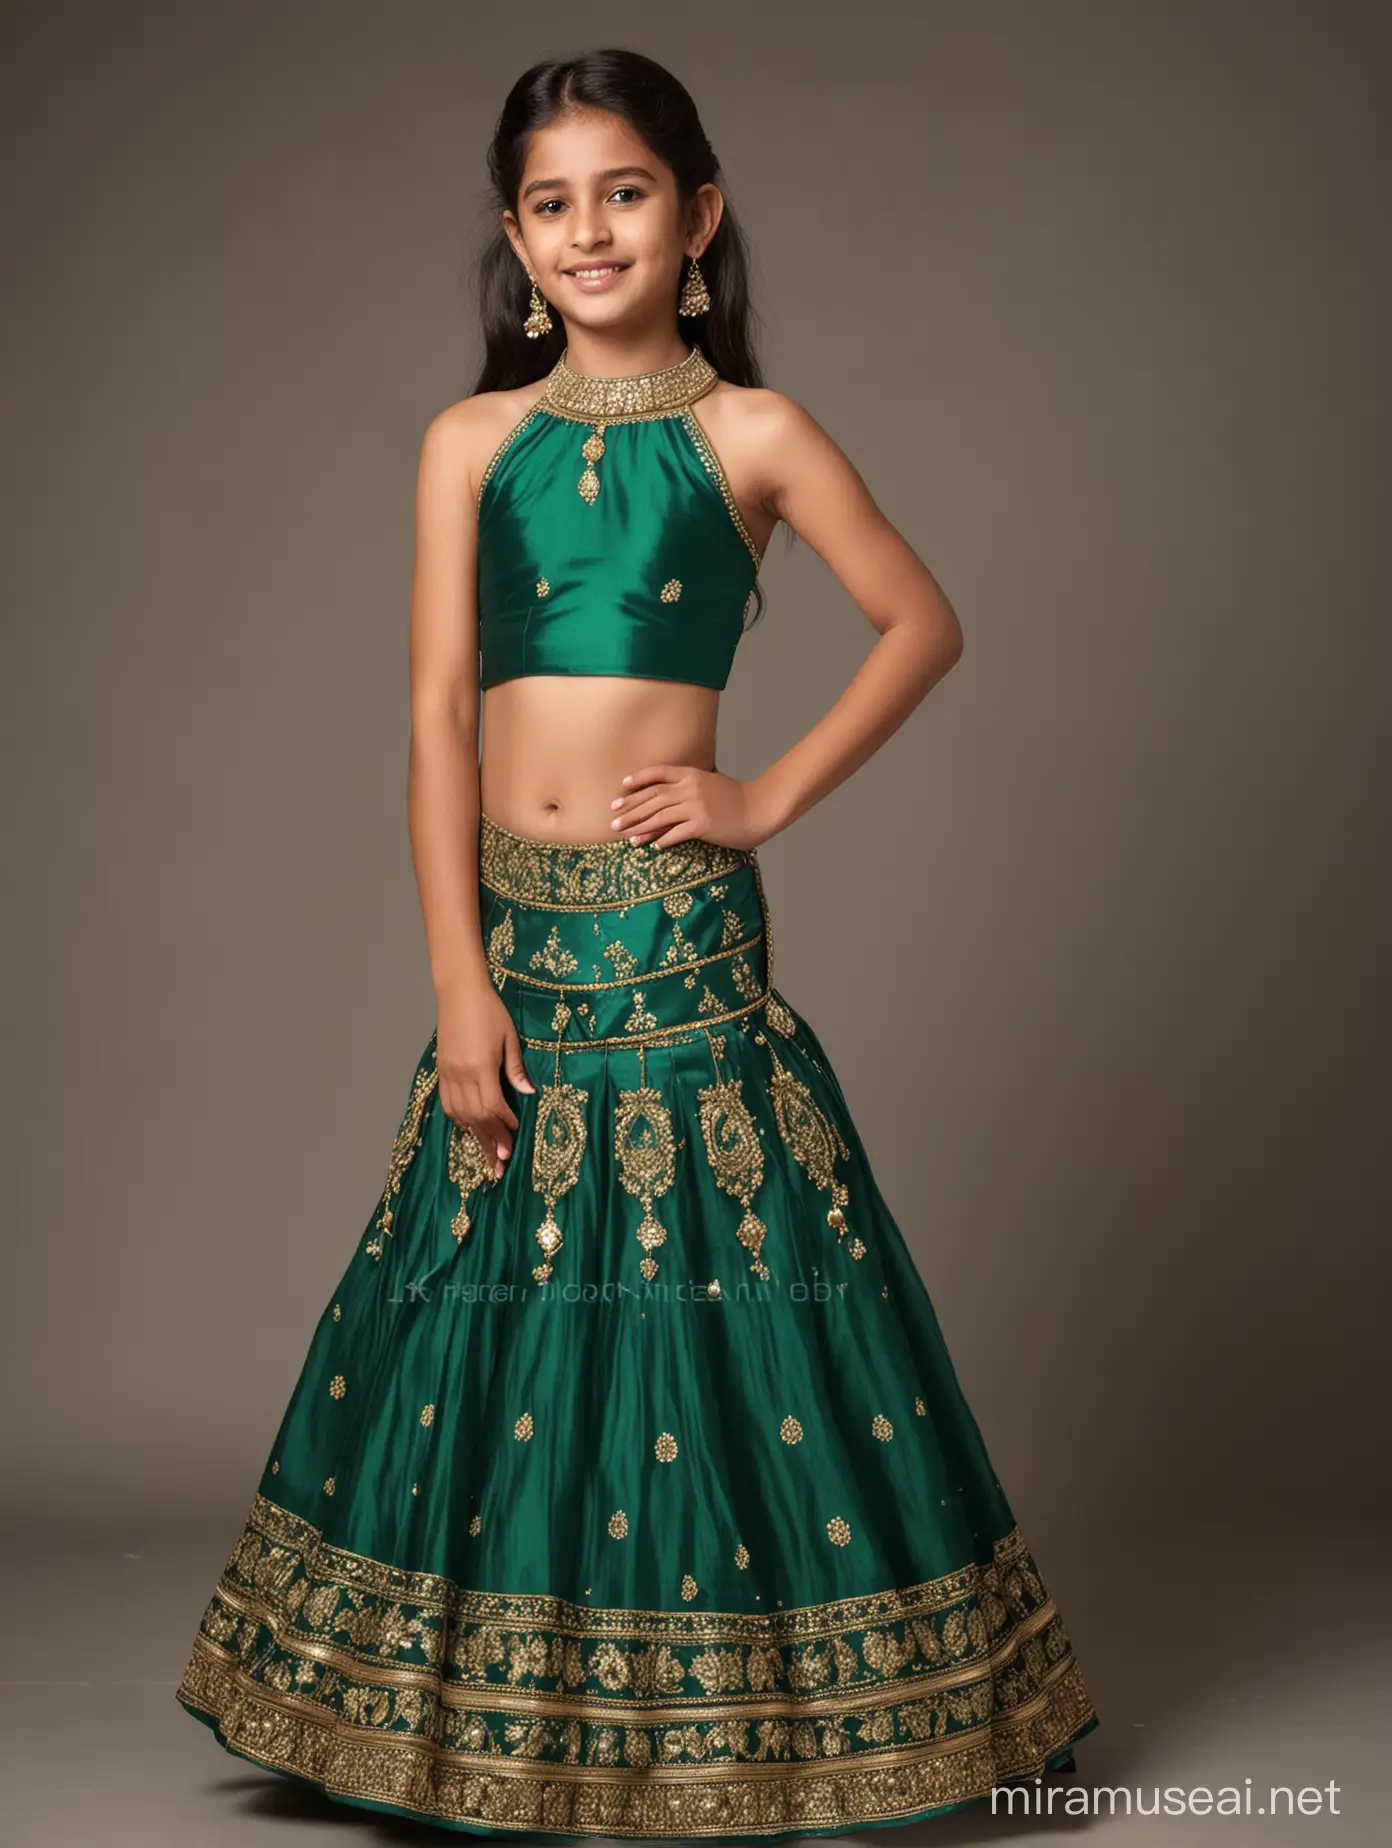 Elegant 12YearOld Girl Celebrating Diwali in Emerald Green Traditional Attire